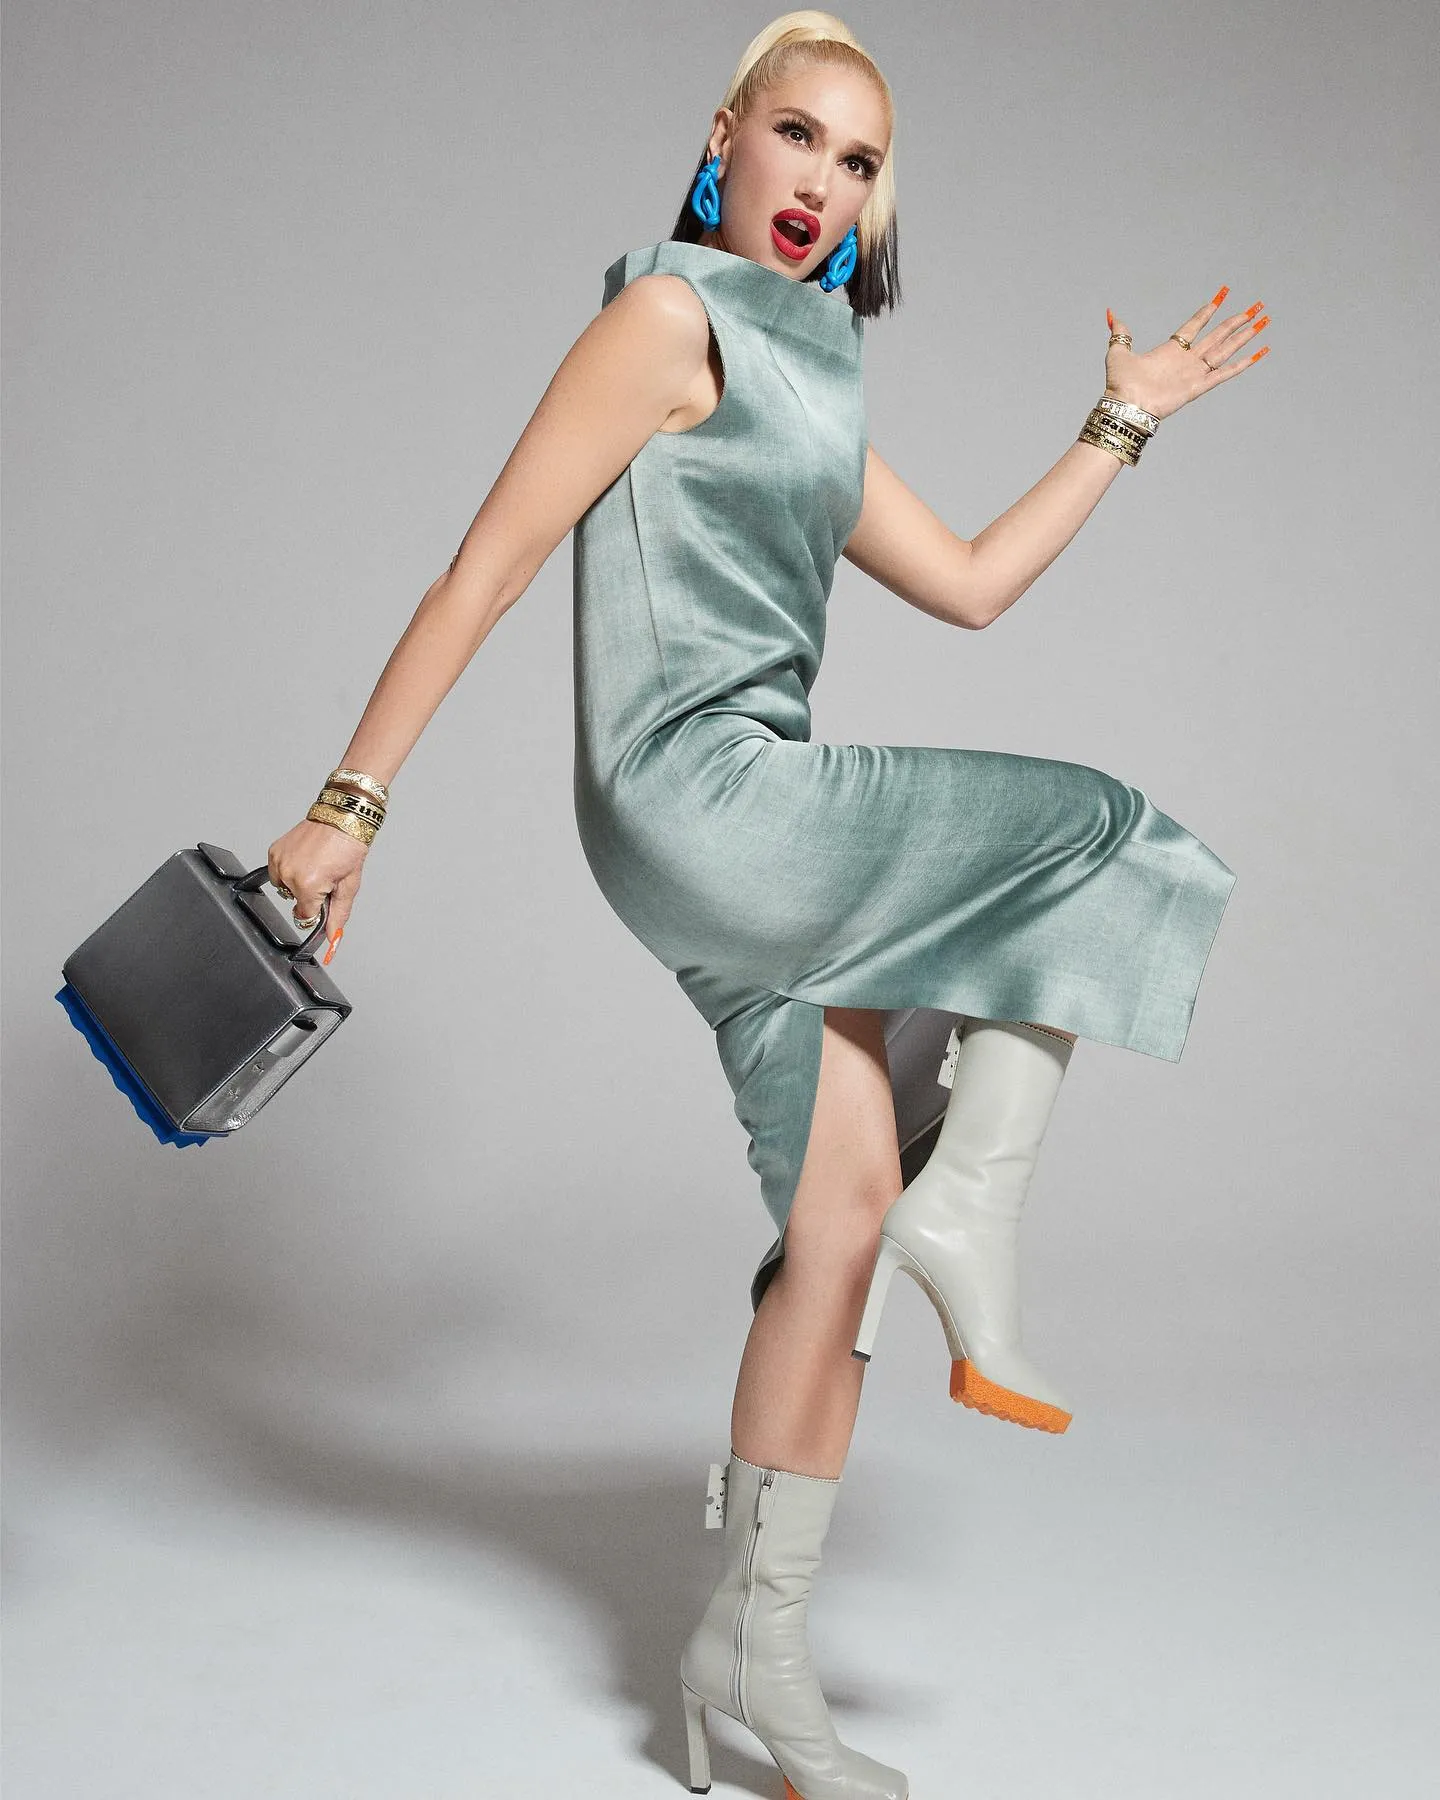 Gwen Stefani Picture